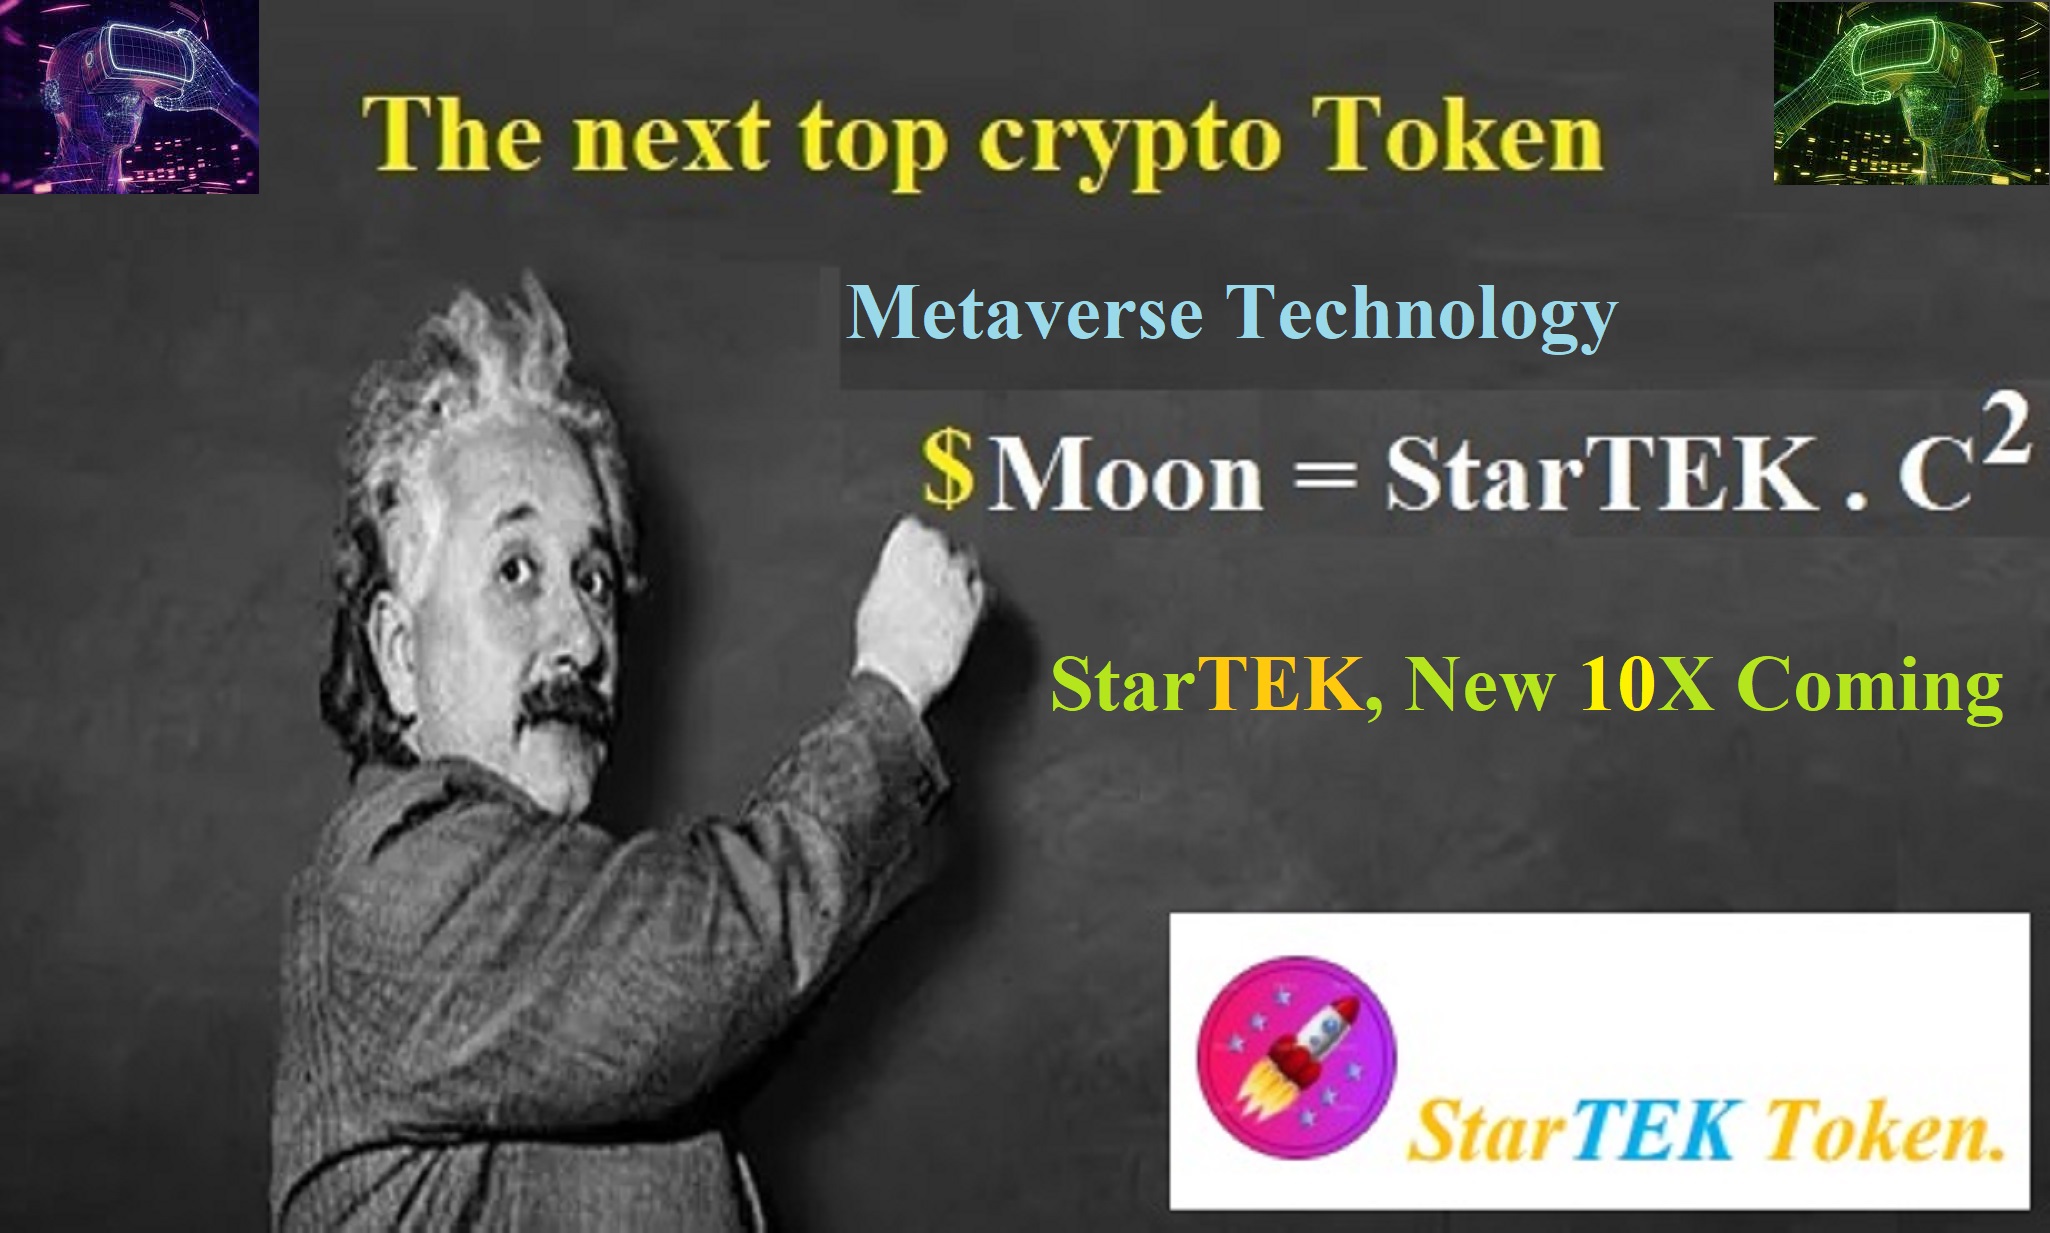 startek-new-10x-coming-in-metaverse-technology-why-startek-is-so-valuable